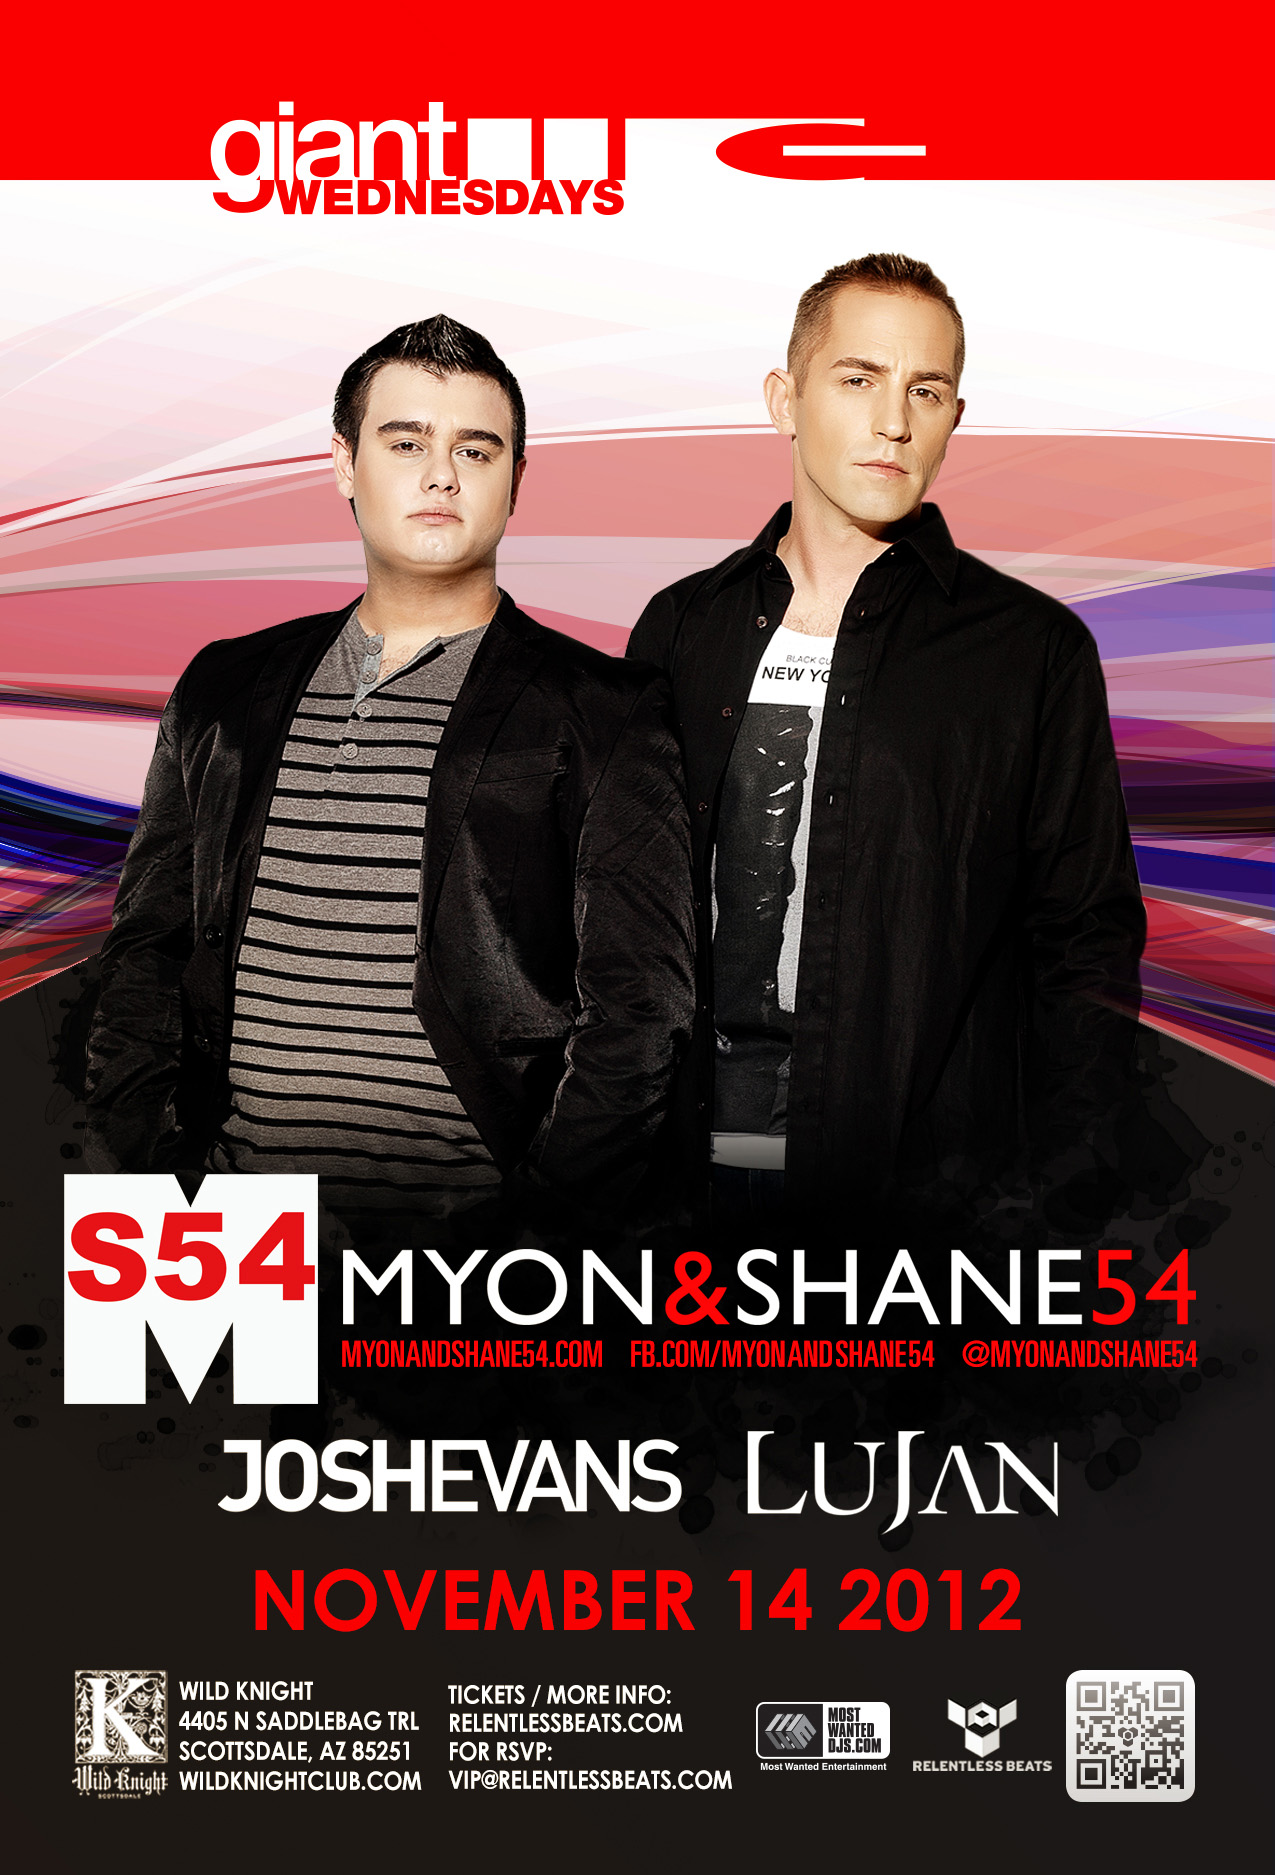 Myon and Shane 54 @ GIANT Wednesday on 11/14/12